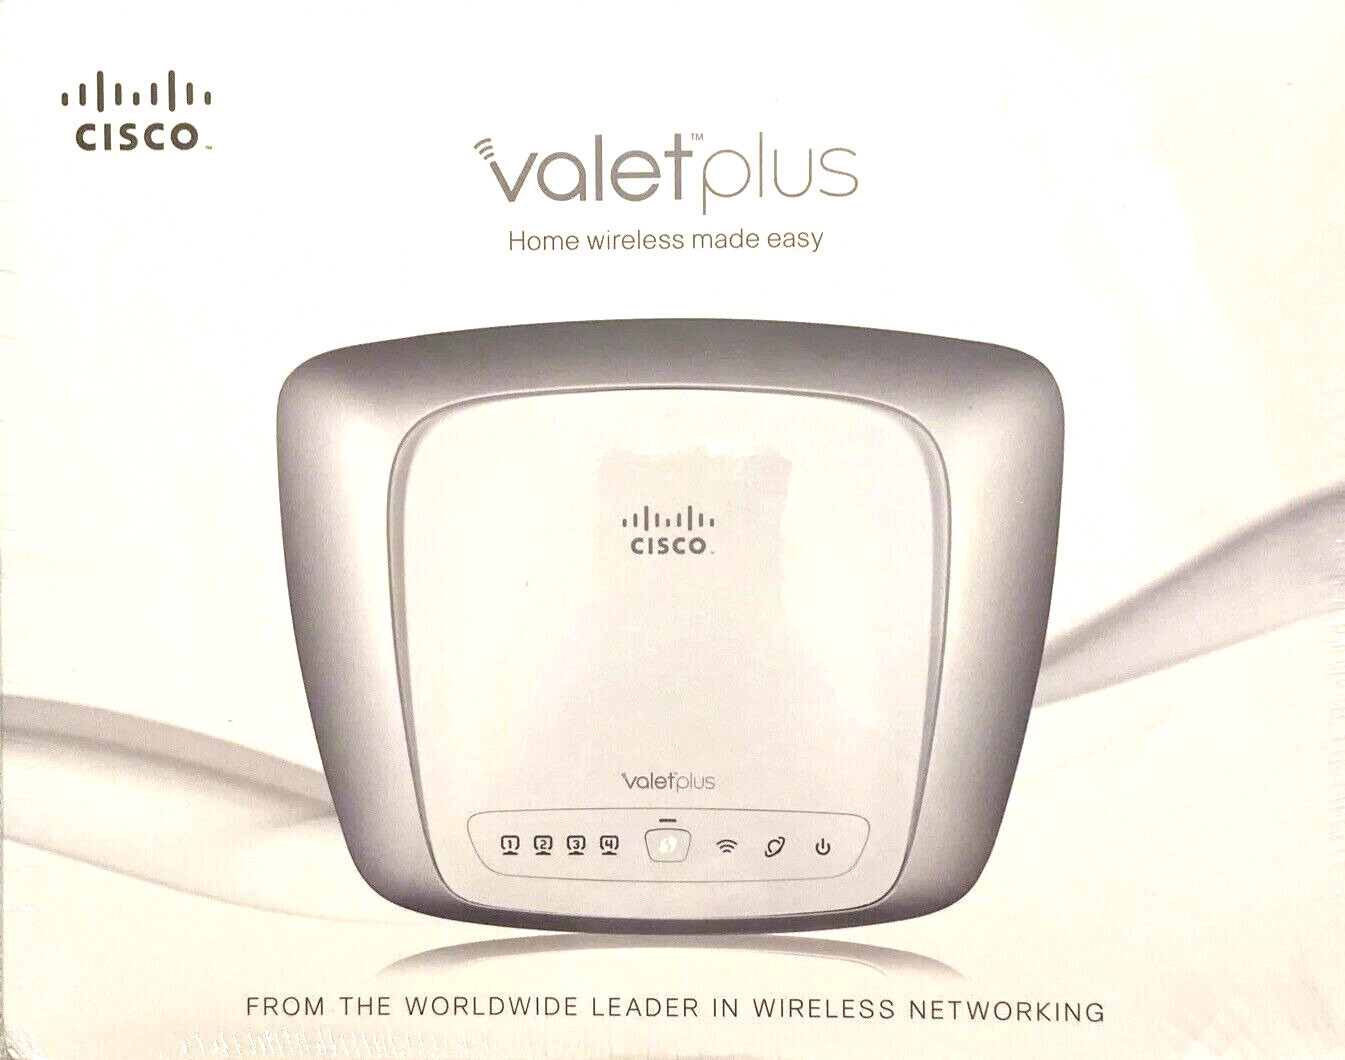 CISCO Valet Plus M20  802.11b/g/n Gigabit Wireless HotSpot Router up to 300Mbps